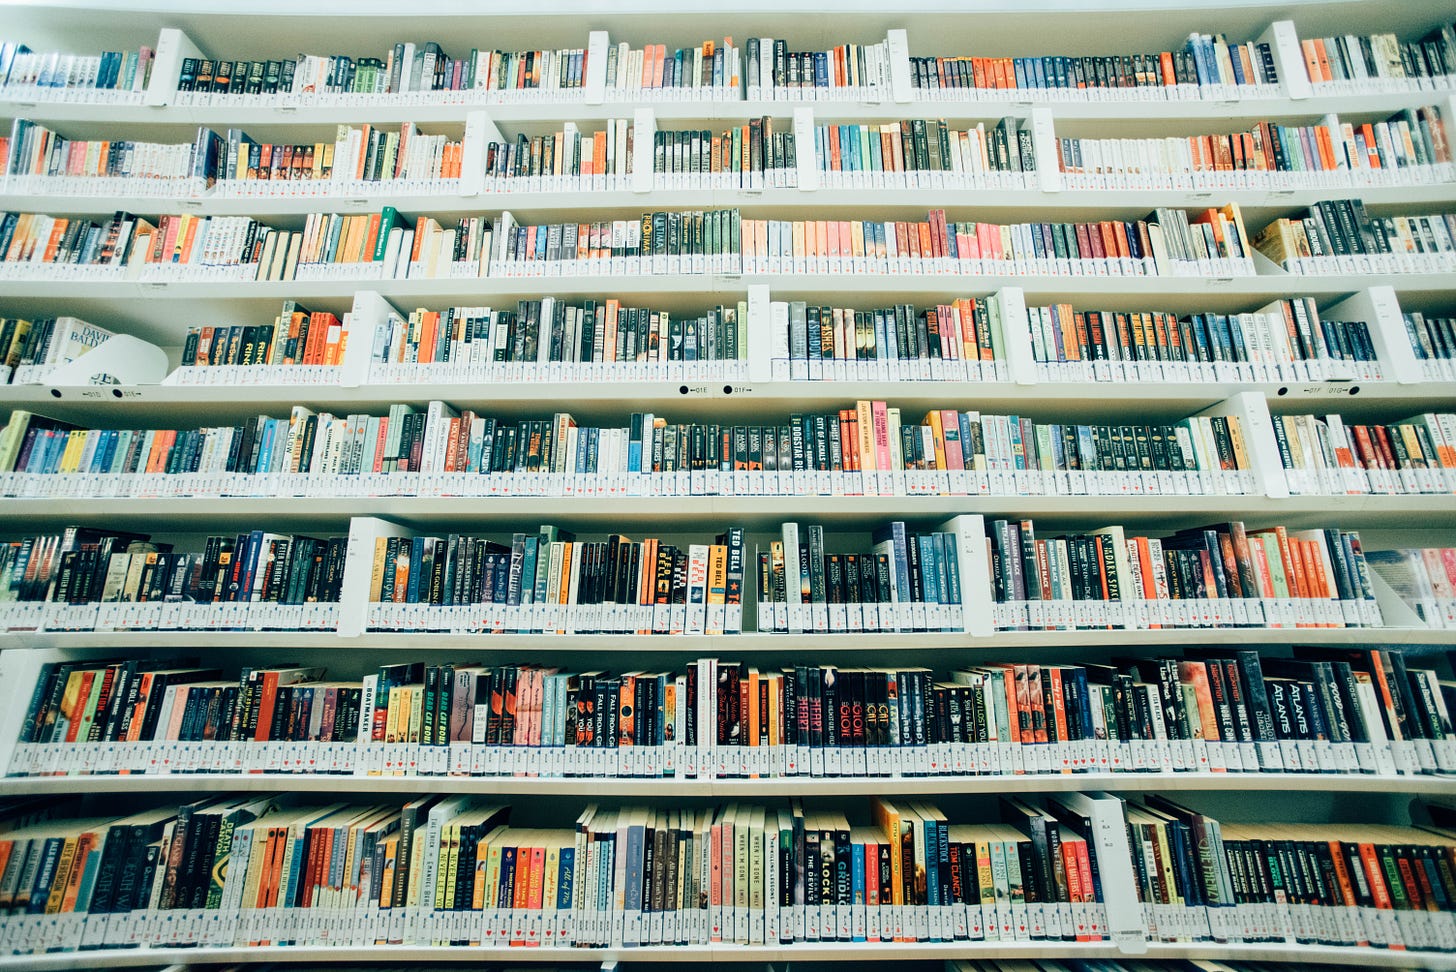 Organized library